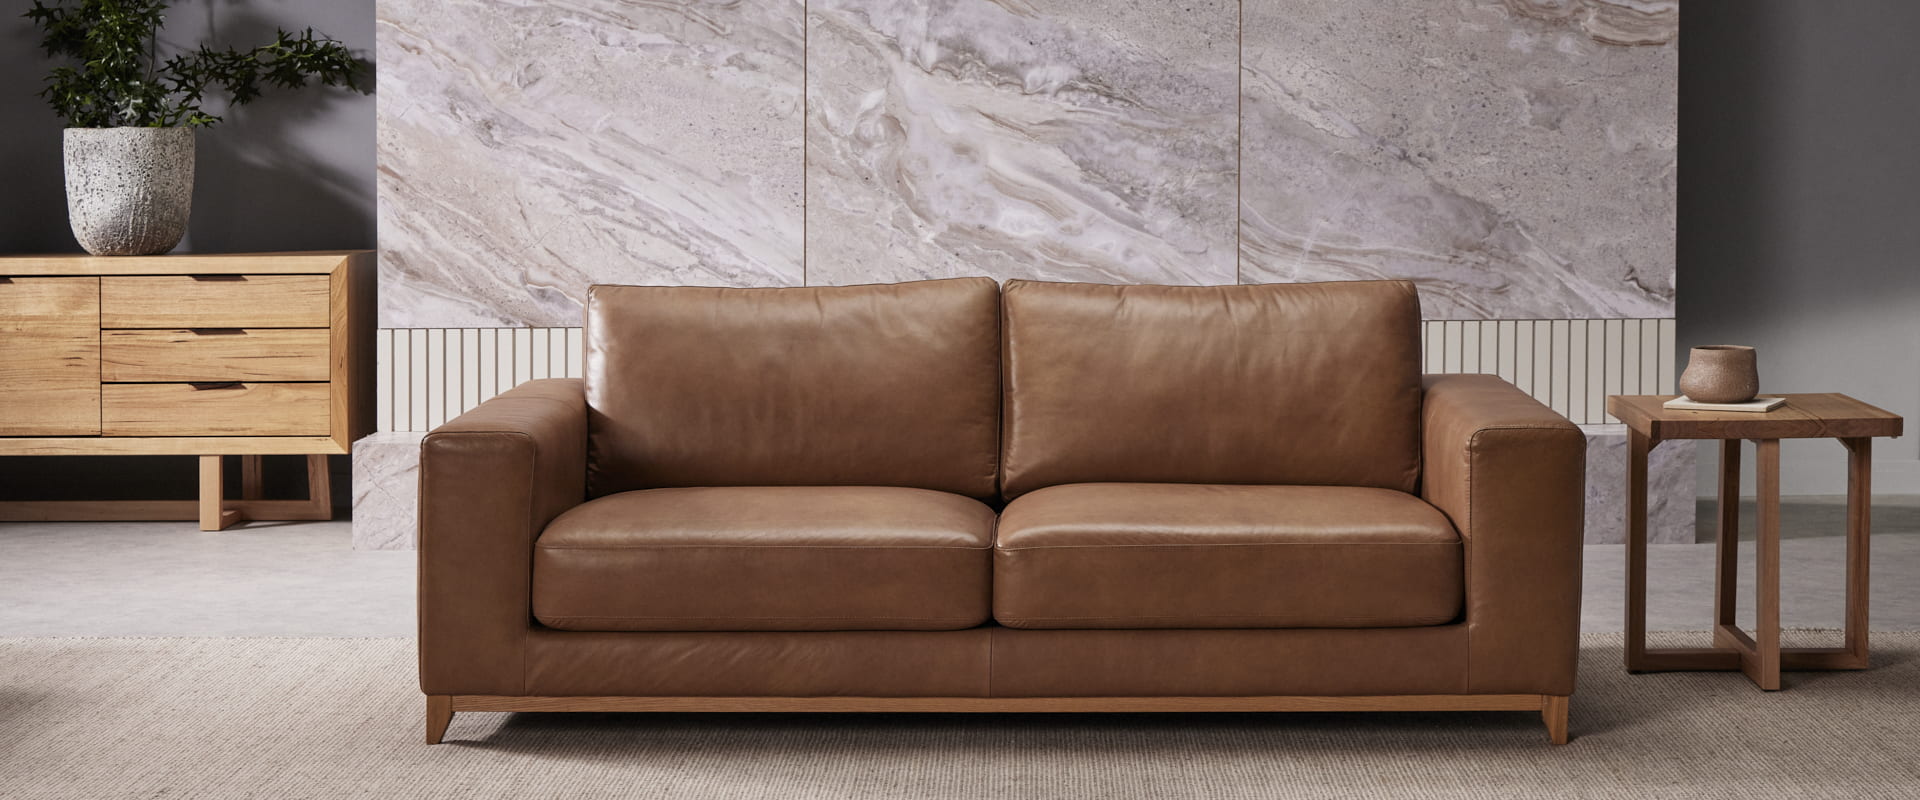 Toscano Leather Sofa Modern Lounge